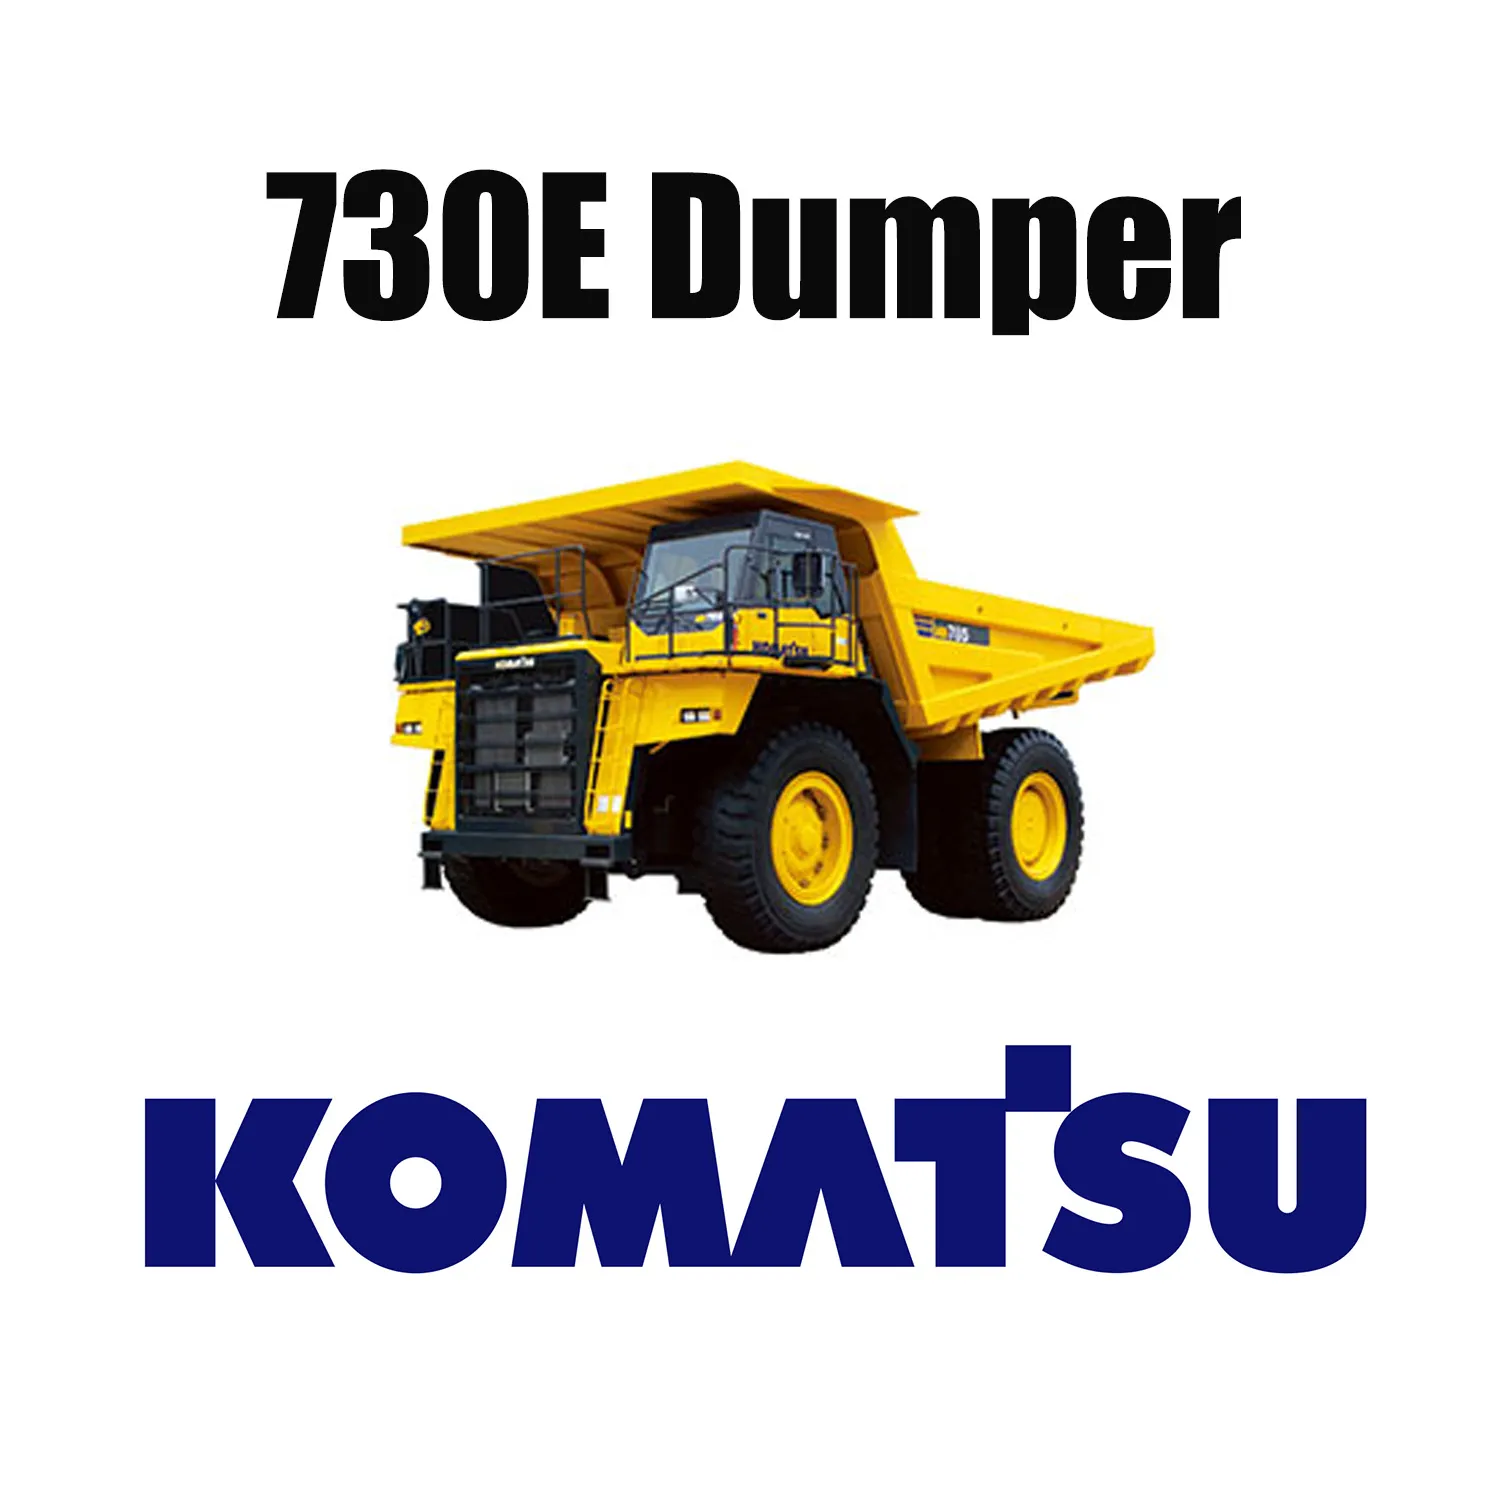 KOMATSU 730E Haul Trucks Equipped with Giant 37.00R57 OTR Mining Tyres